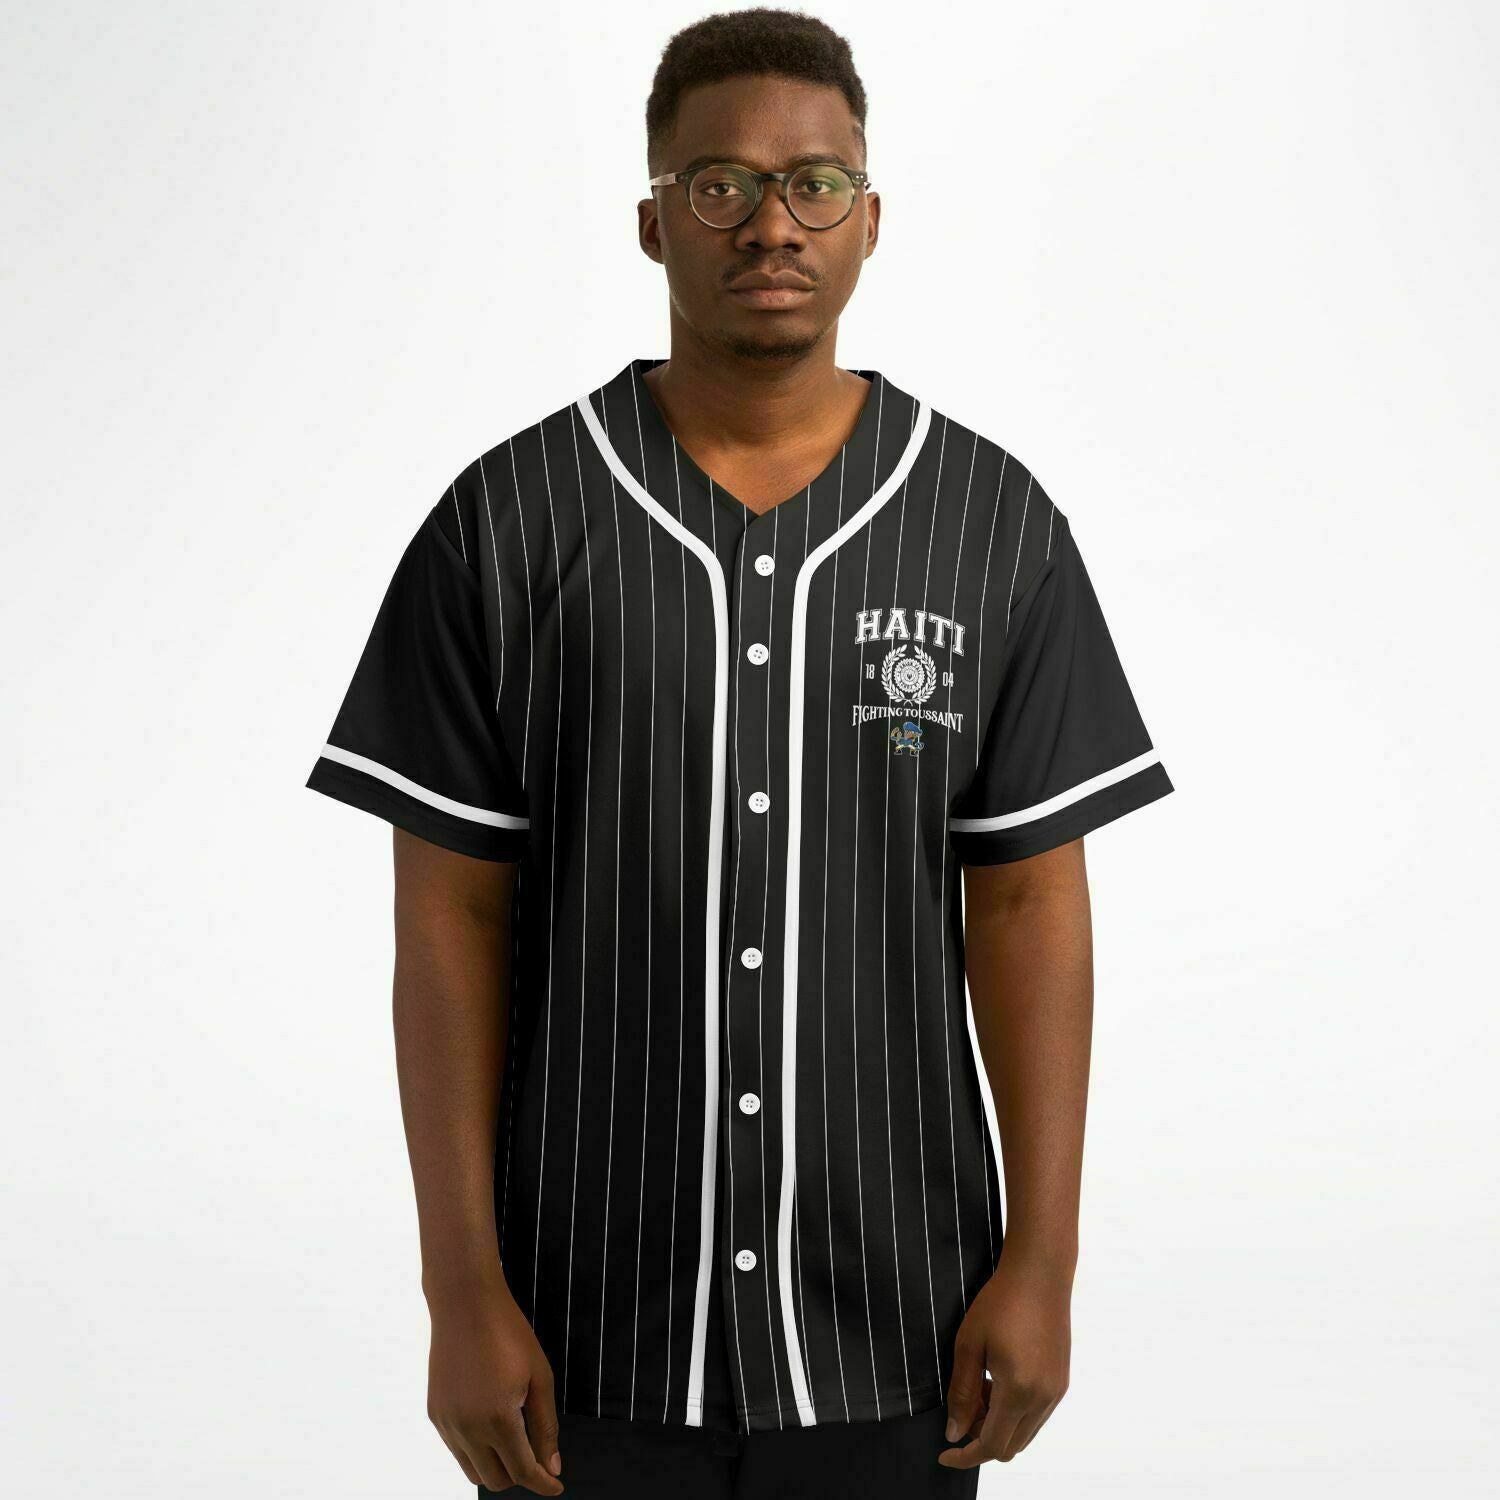 Pin on Baseball Jersey Outfit